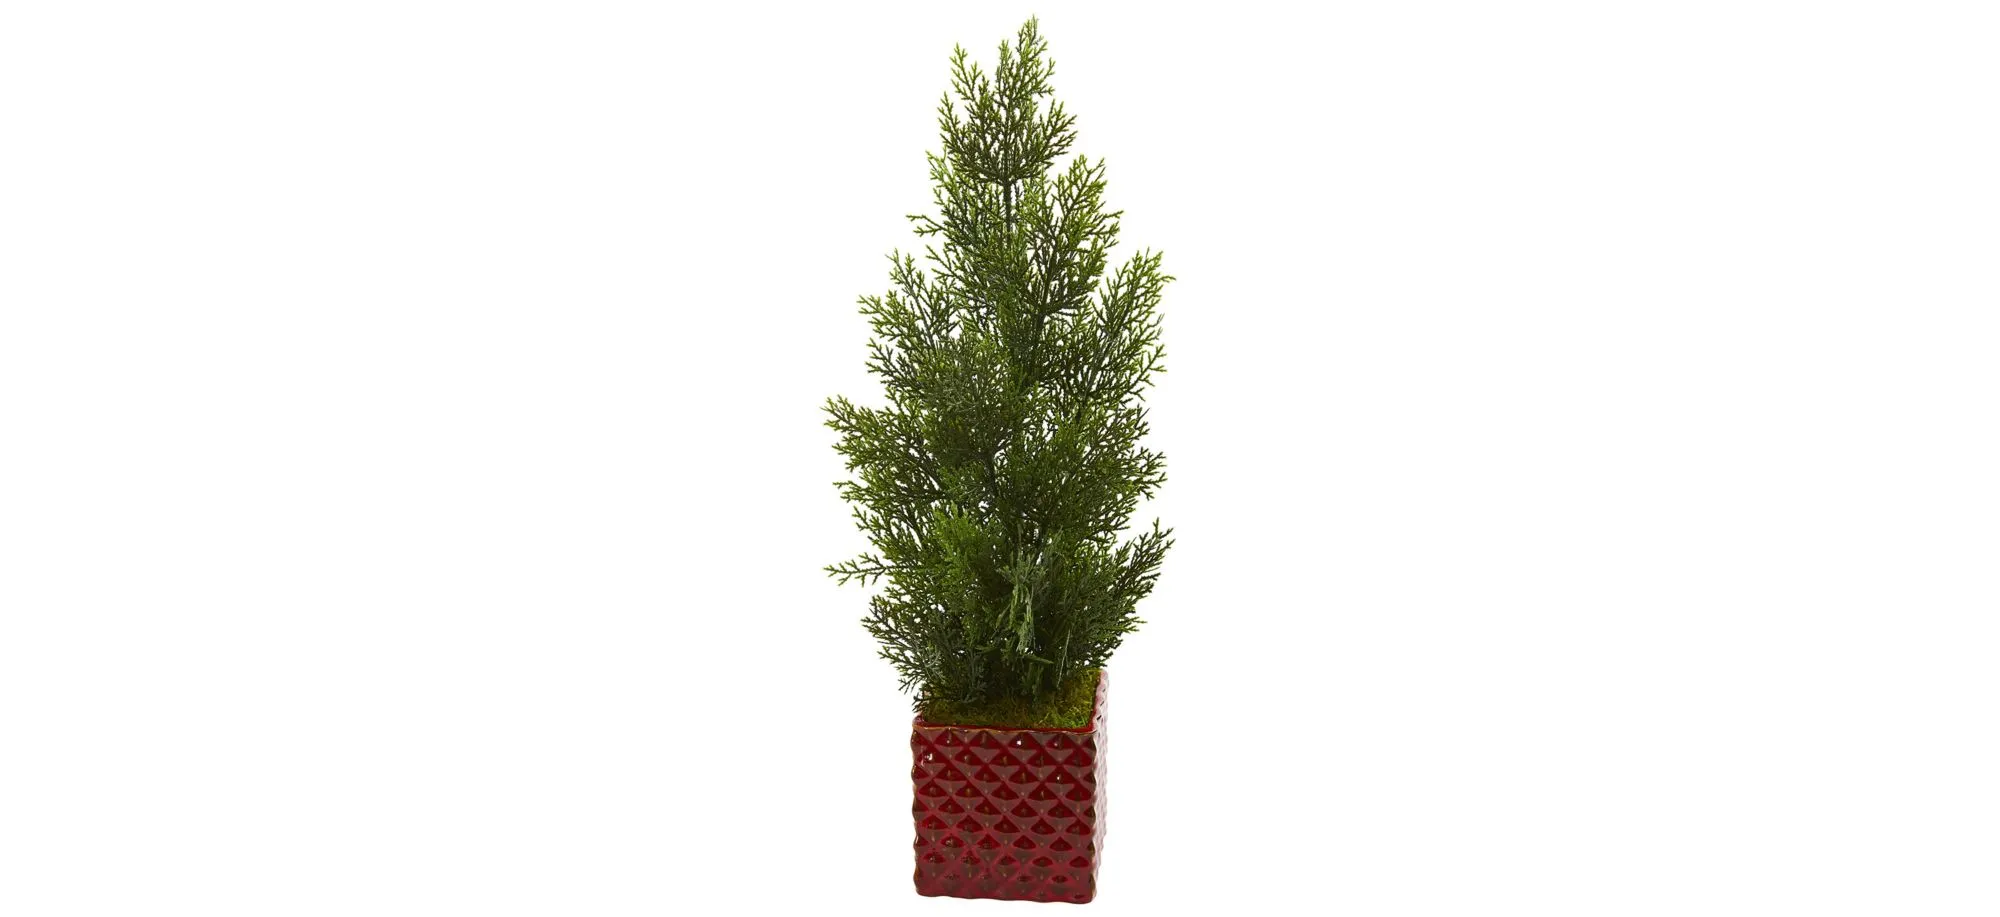 25" Mini Cedar Pine Artificial Tree in Red Planter (Indoor/Outdoor) in Green by Bellanest